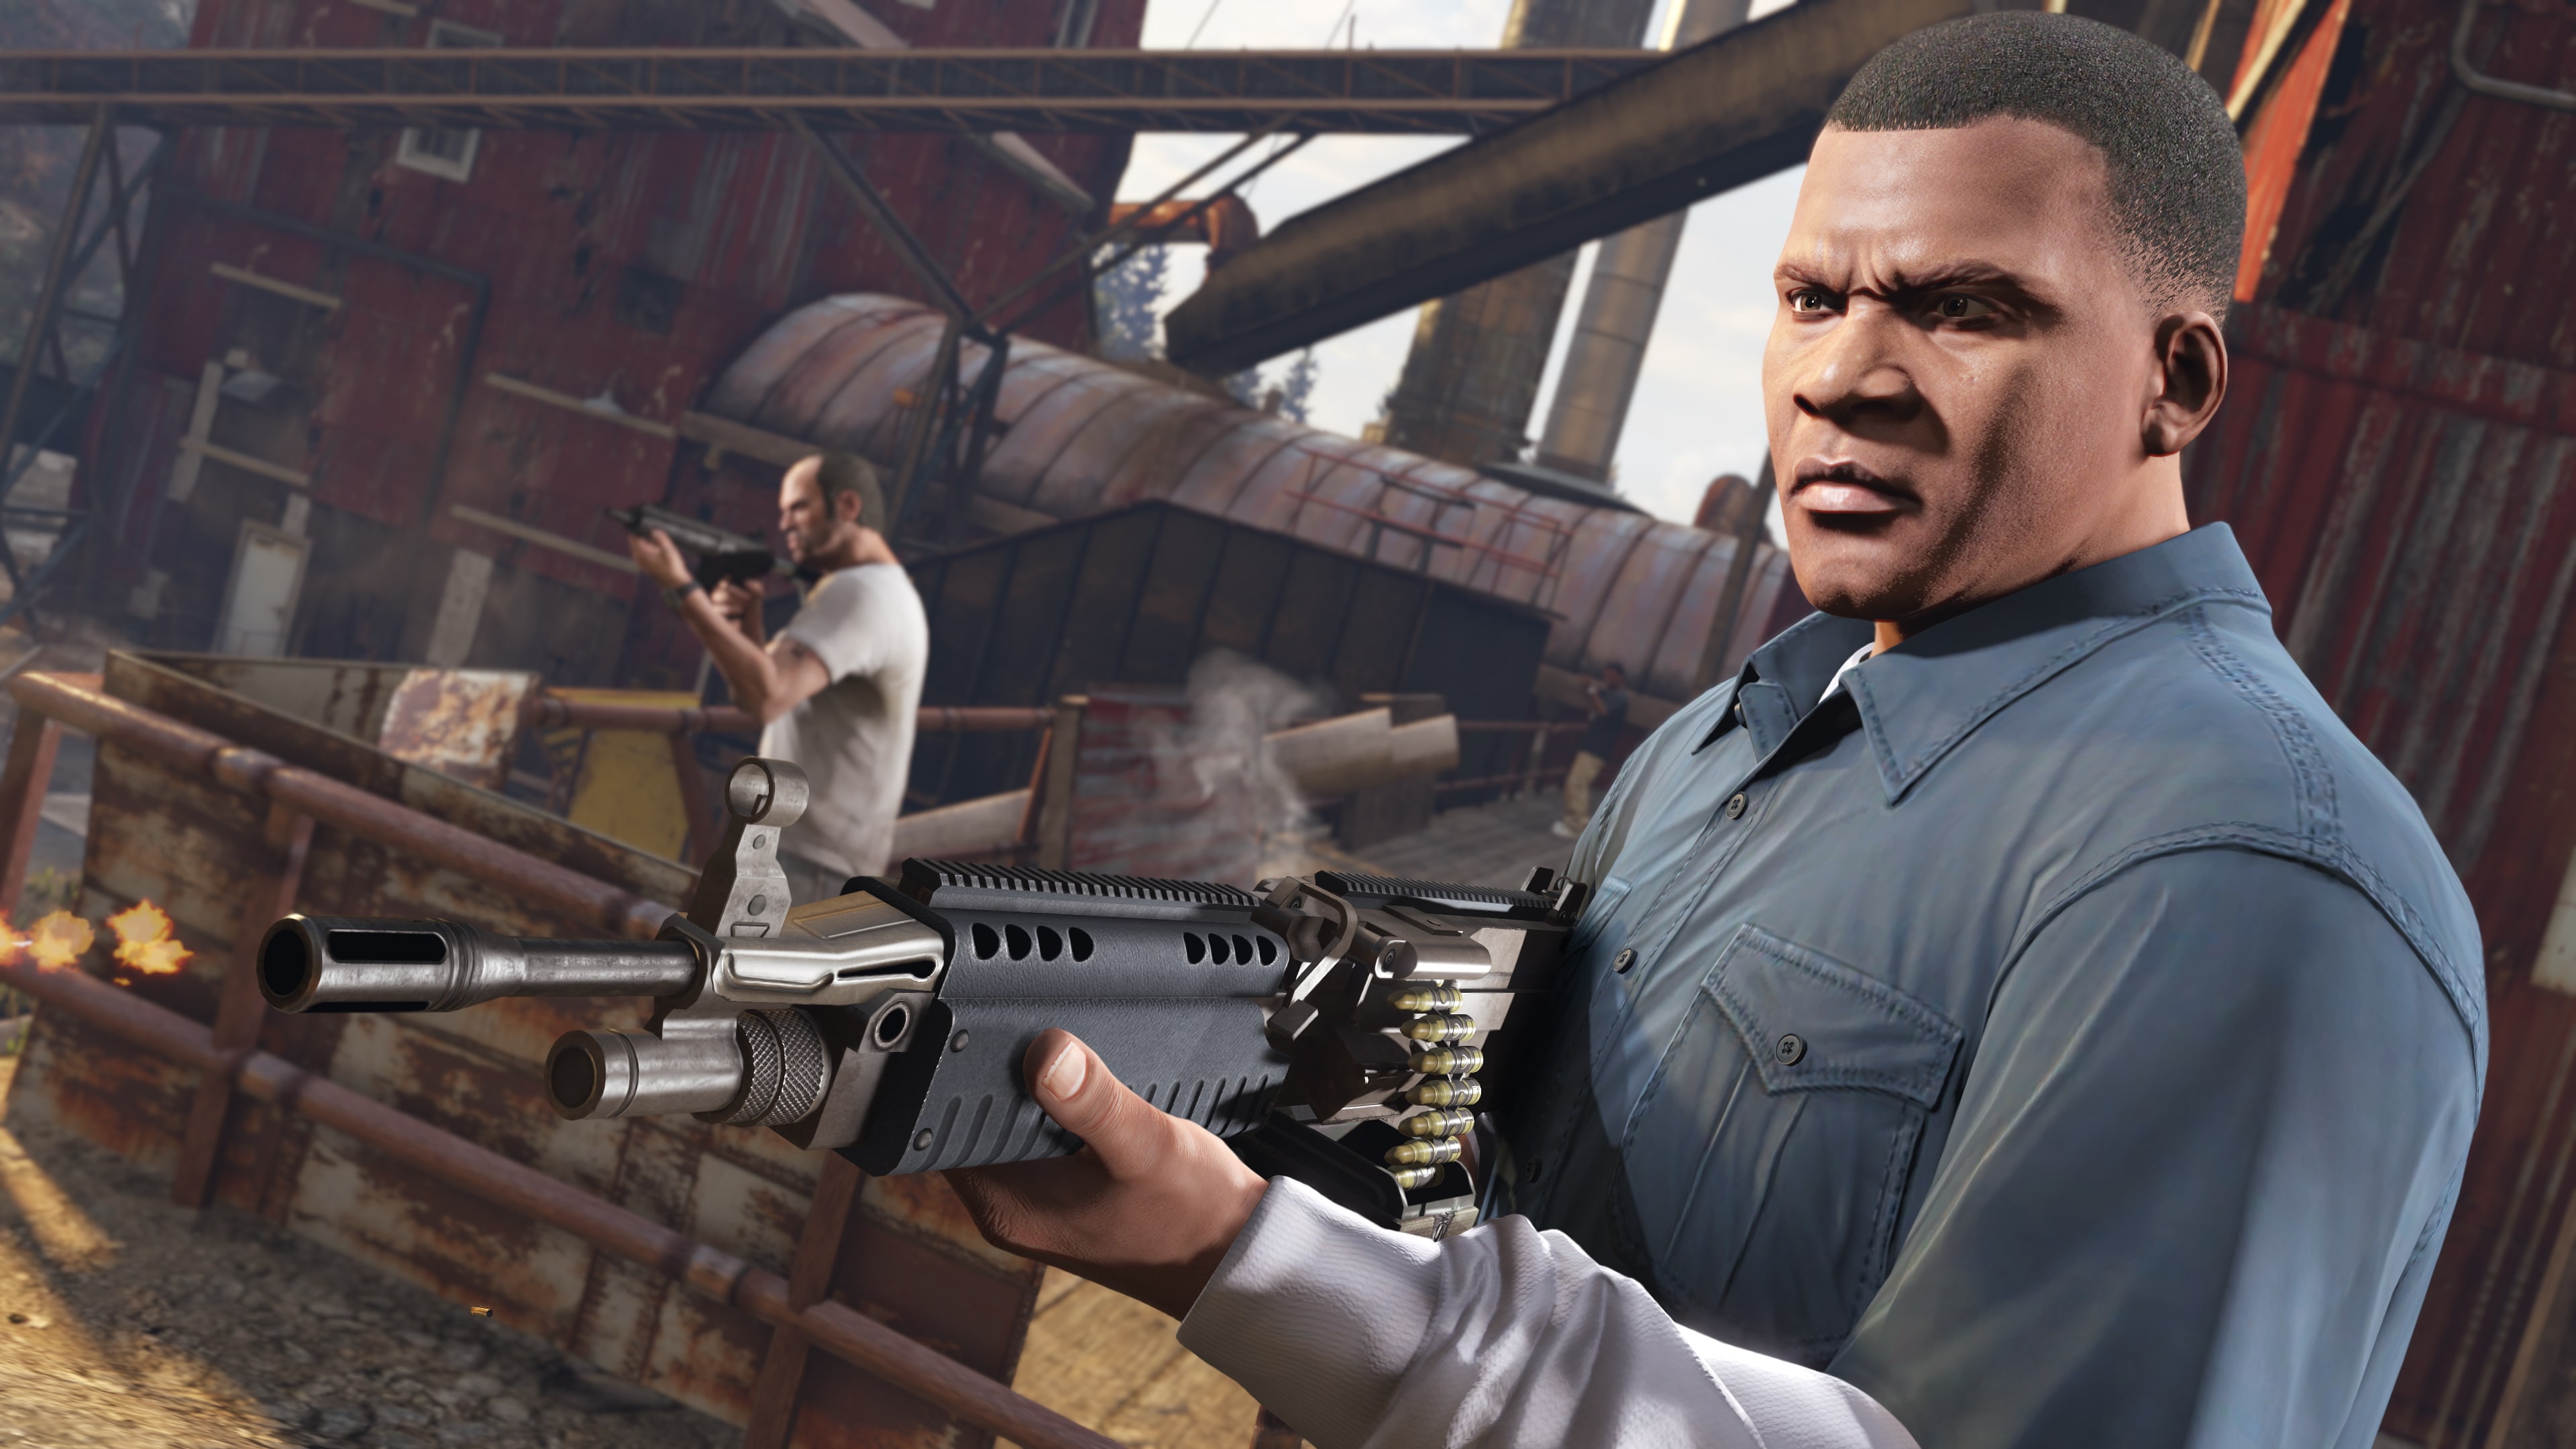 Grand Theft Auto V  PlayStation (Indonesia)